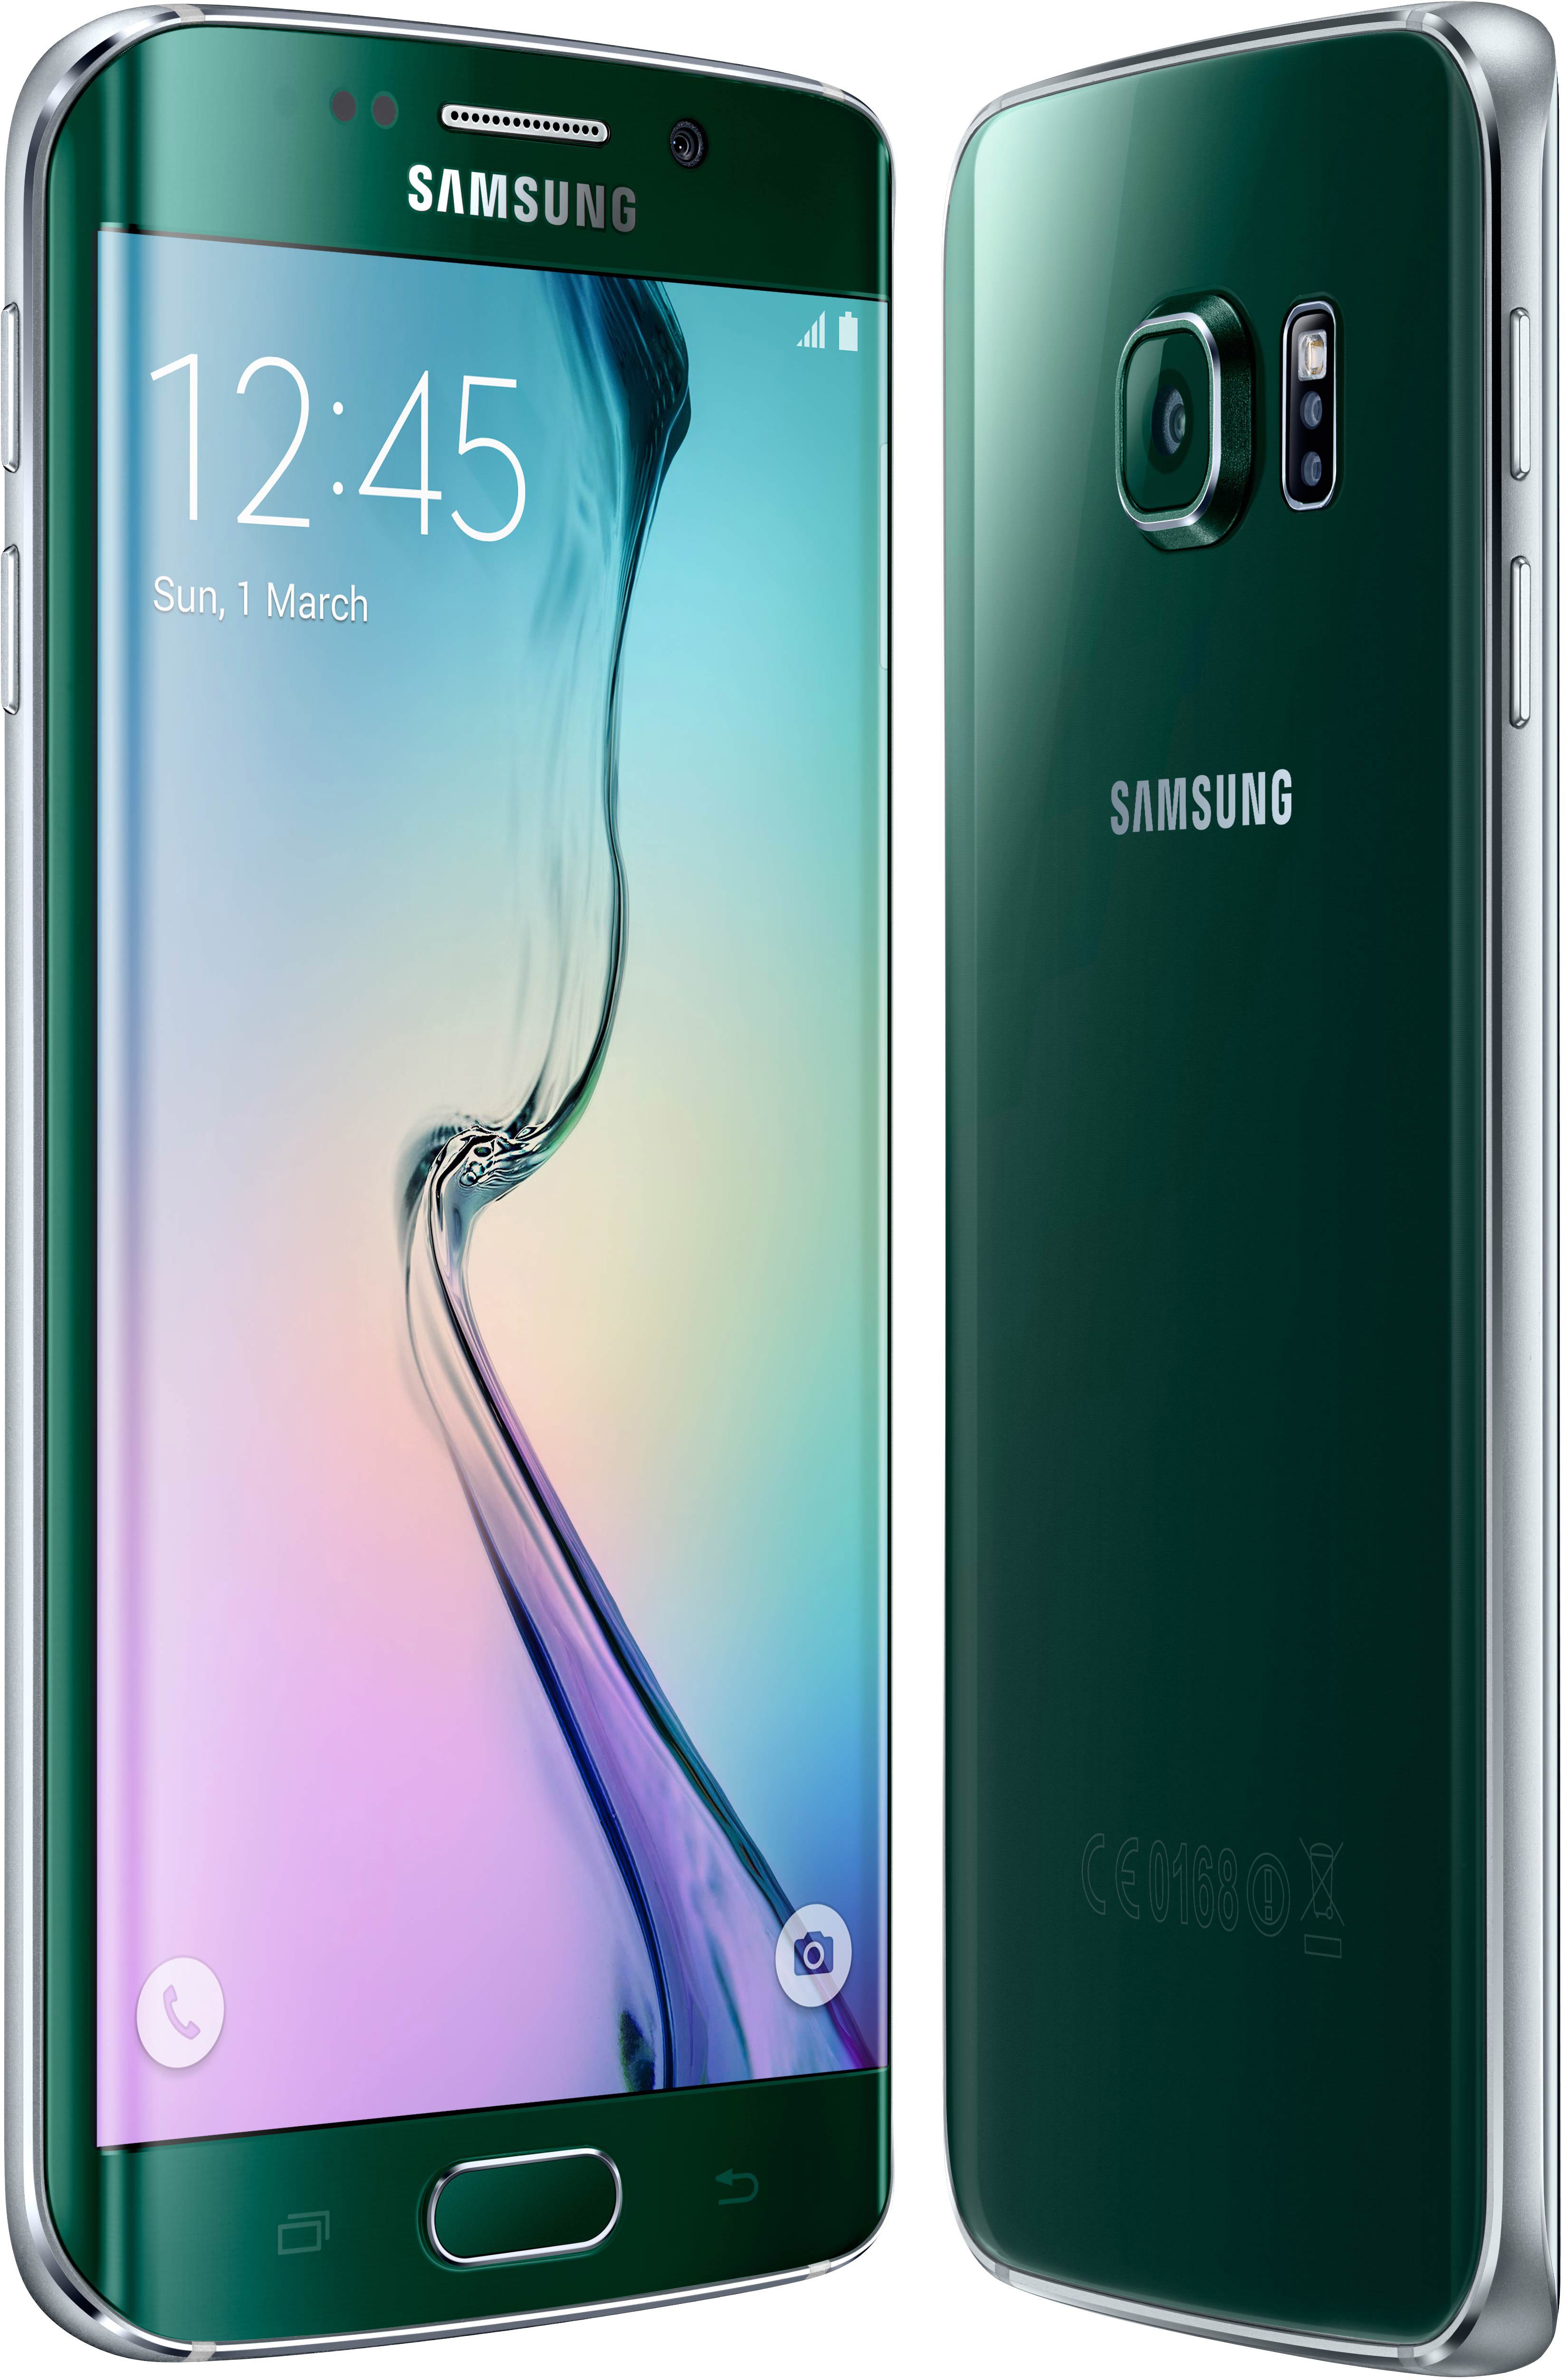 Самсунг телефон новинка цены. Samsung s6 Edge. Samsung Galaxy s6 Edge SM-g925f. Samsung Galaxy s6 Edge 128gb. Samsung Galaxy s6 Edge Plus.